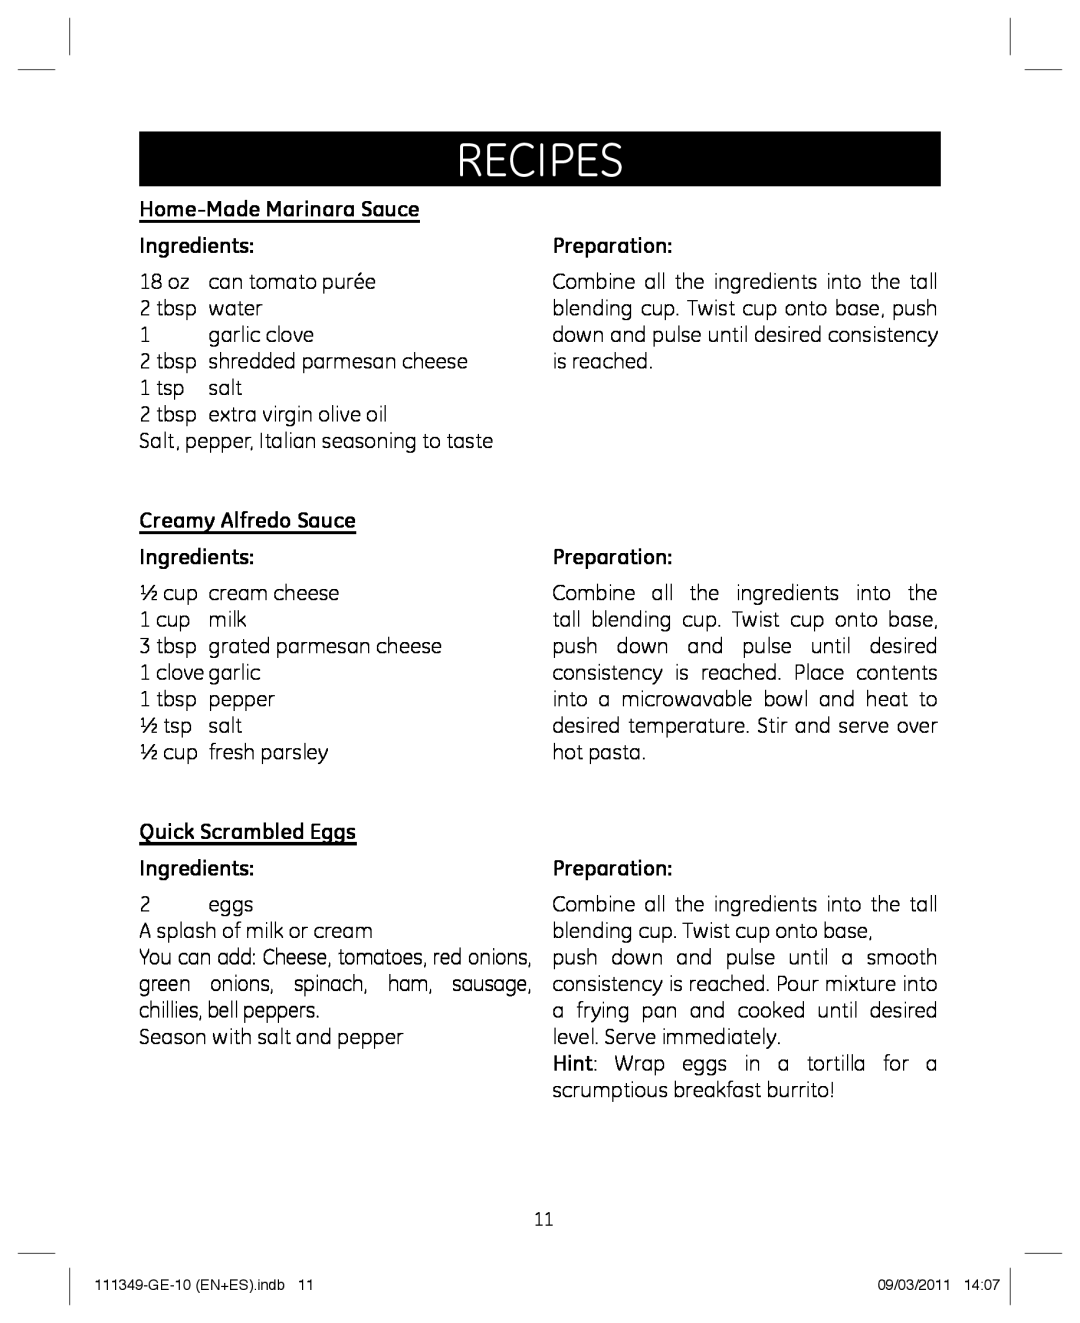 GE 898679 manual Home-Made Marinara Sauce, Creamy Alfredo Sauce, Quick Scrambled Eggs, recipes, Ingredients, Preparation 